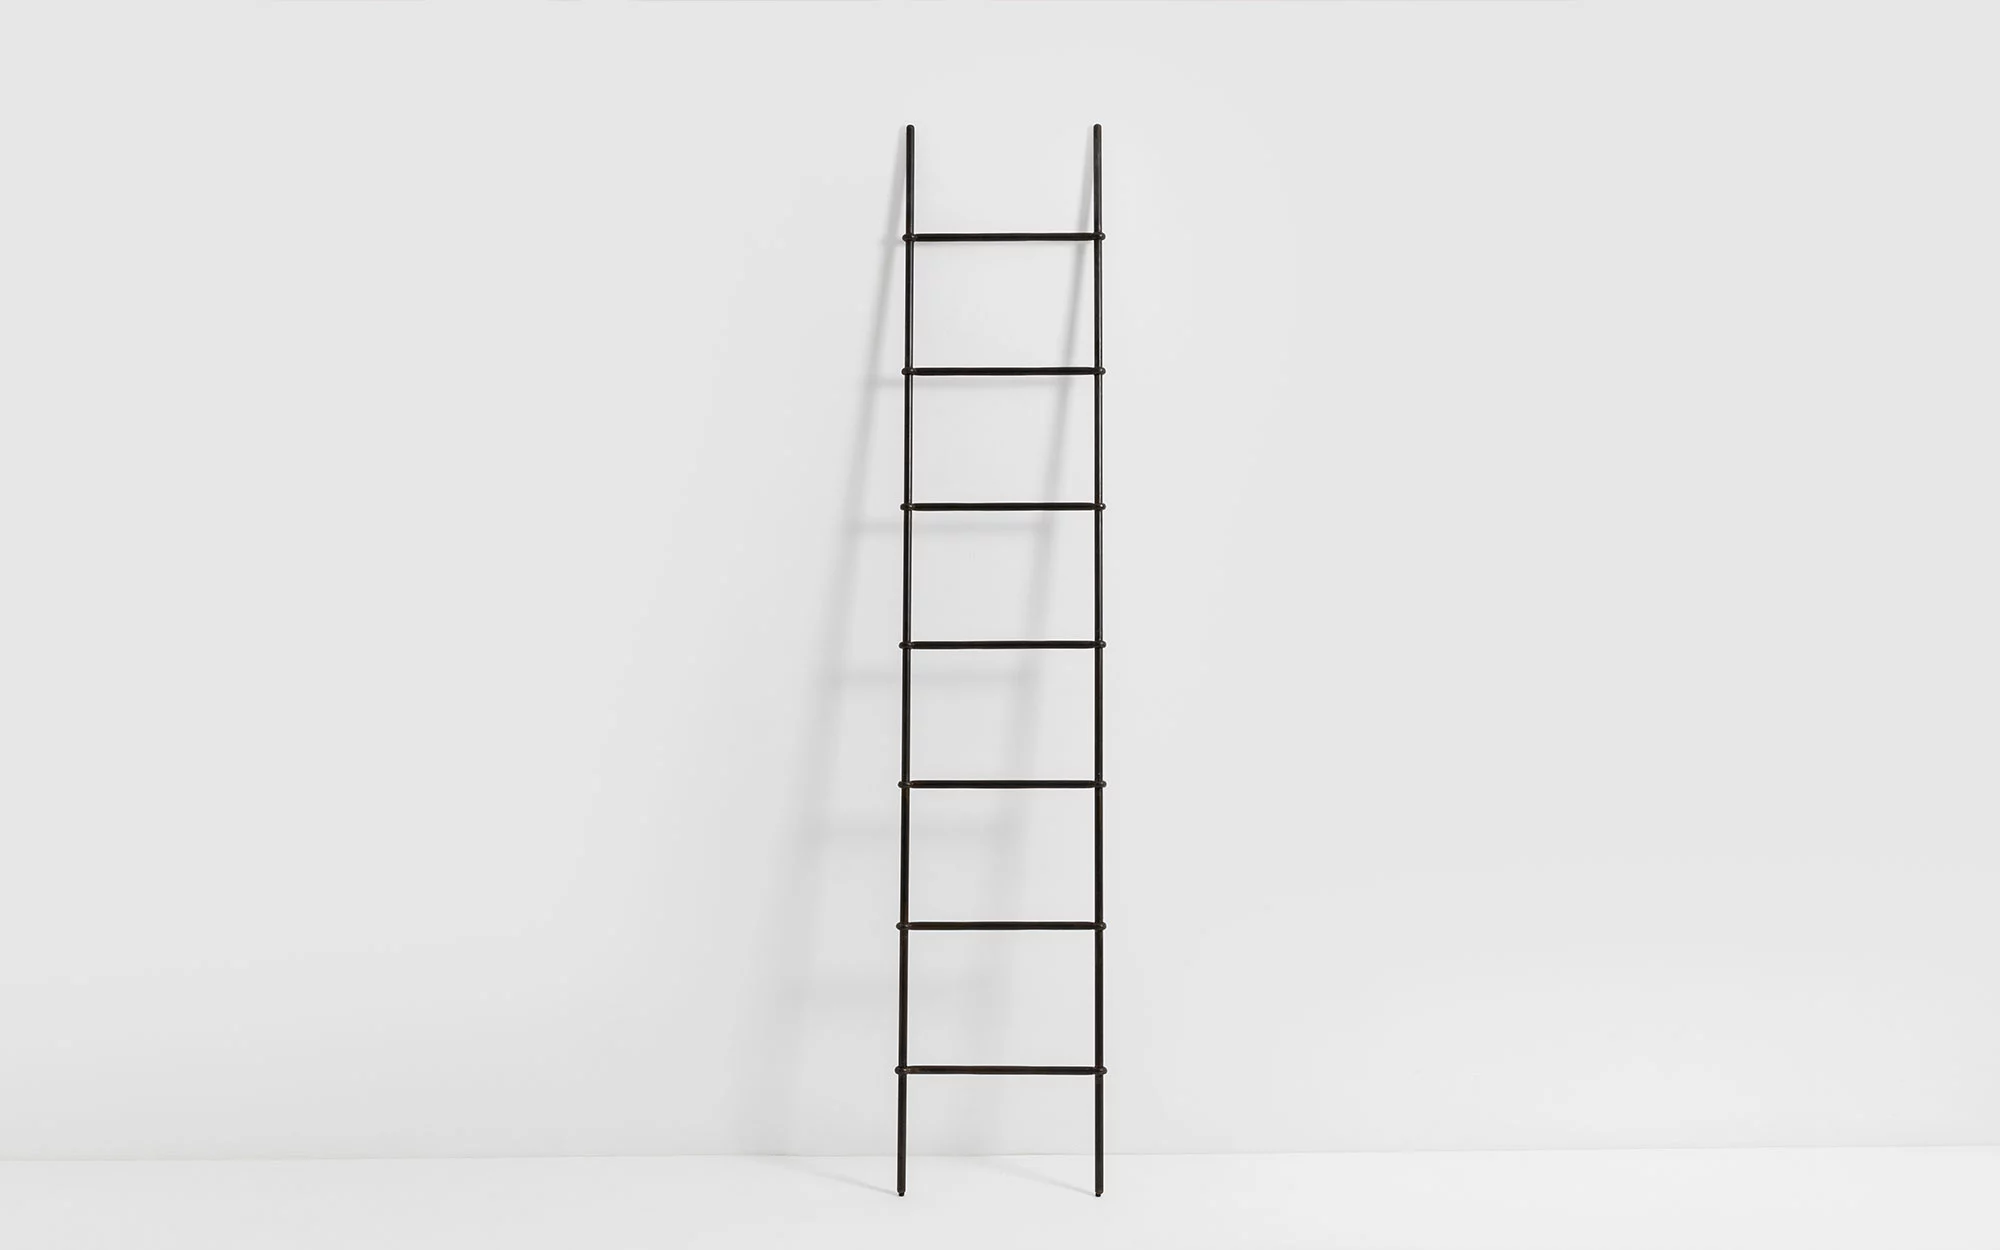 Ciel ladder - Ronan & Erwan Bouroullec - miscellaneous 9589f51cf3a84e479ea7e835dcba1a04- Galerie kreo